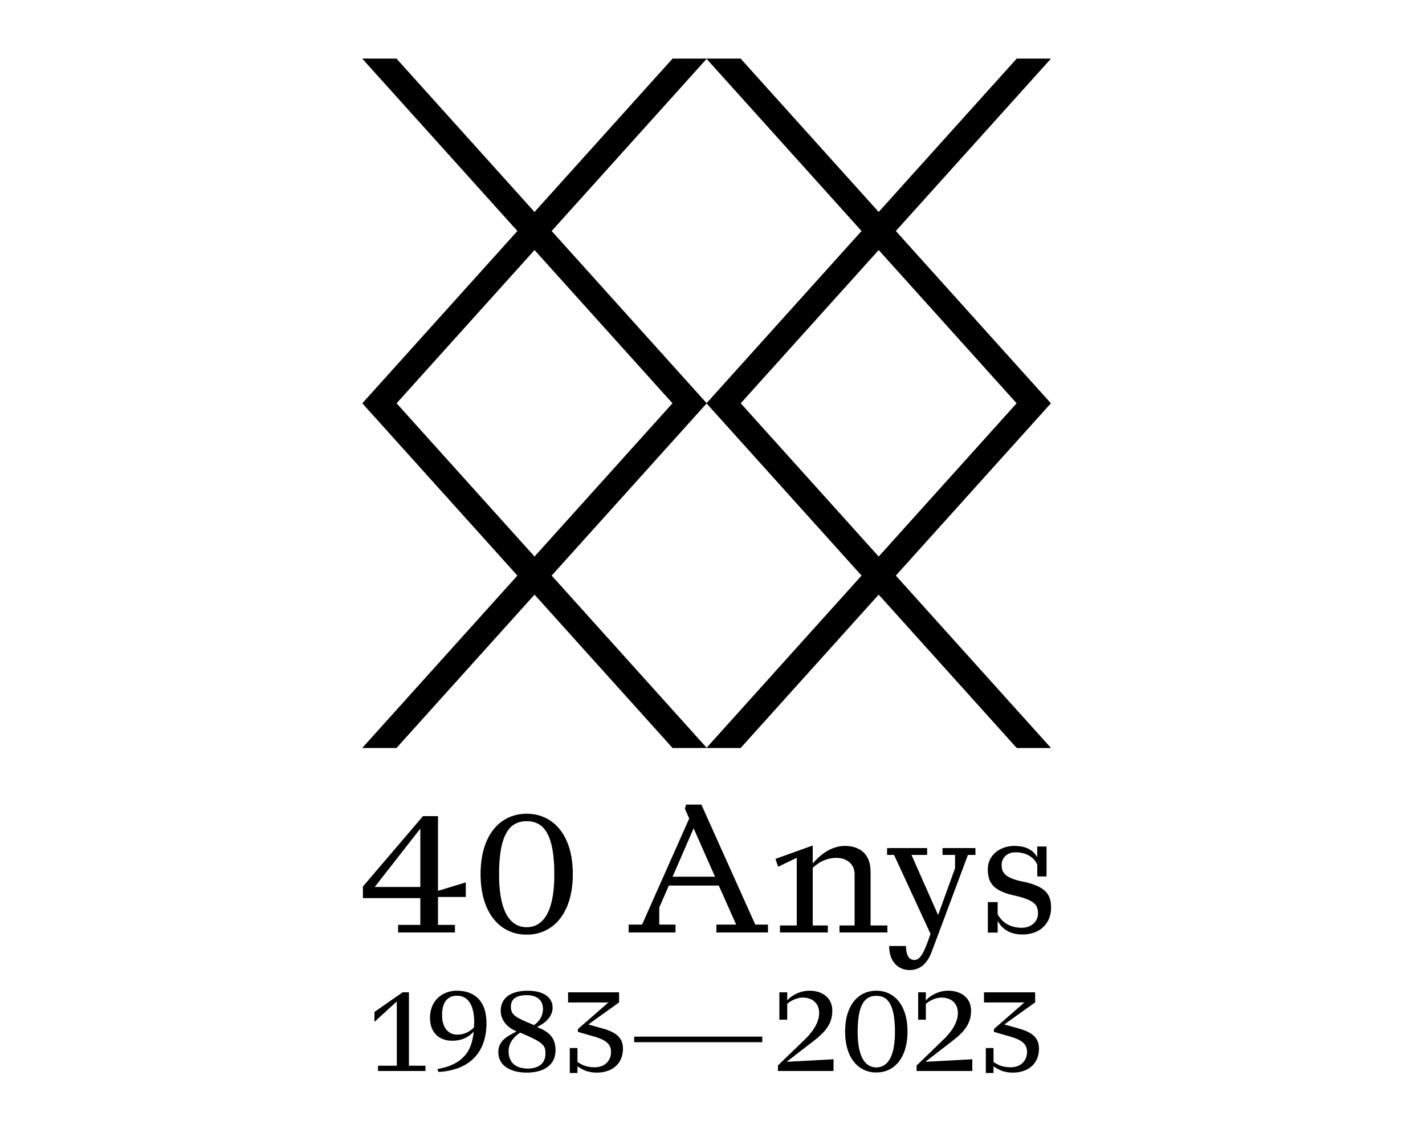 Logo especial 40º aniversario de Teixidors. Logo conmemorativo del periodo 1983-2023